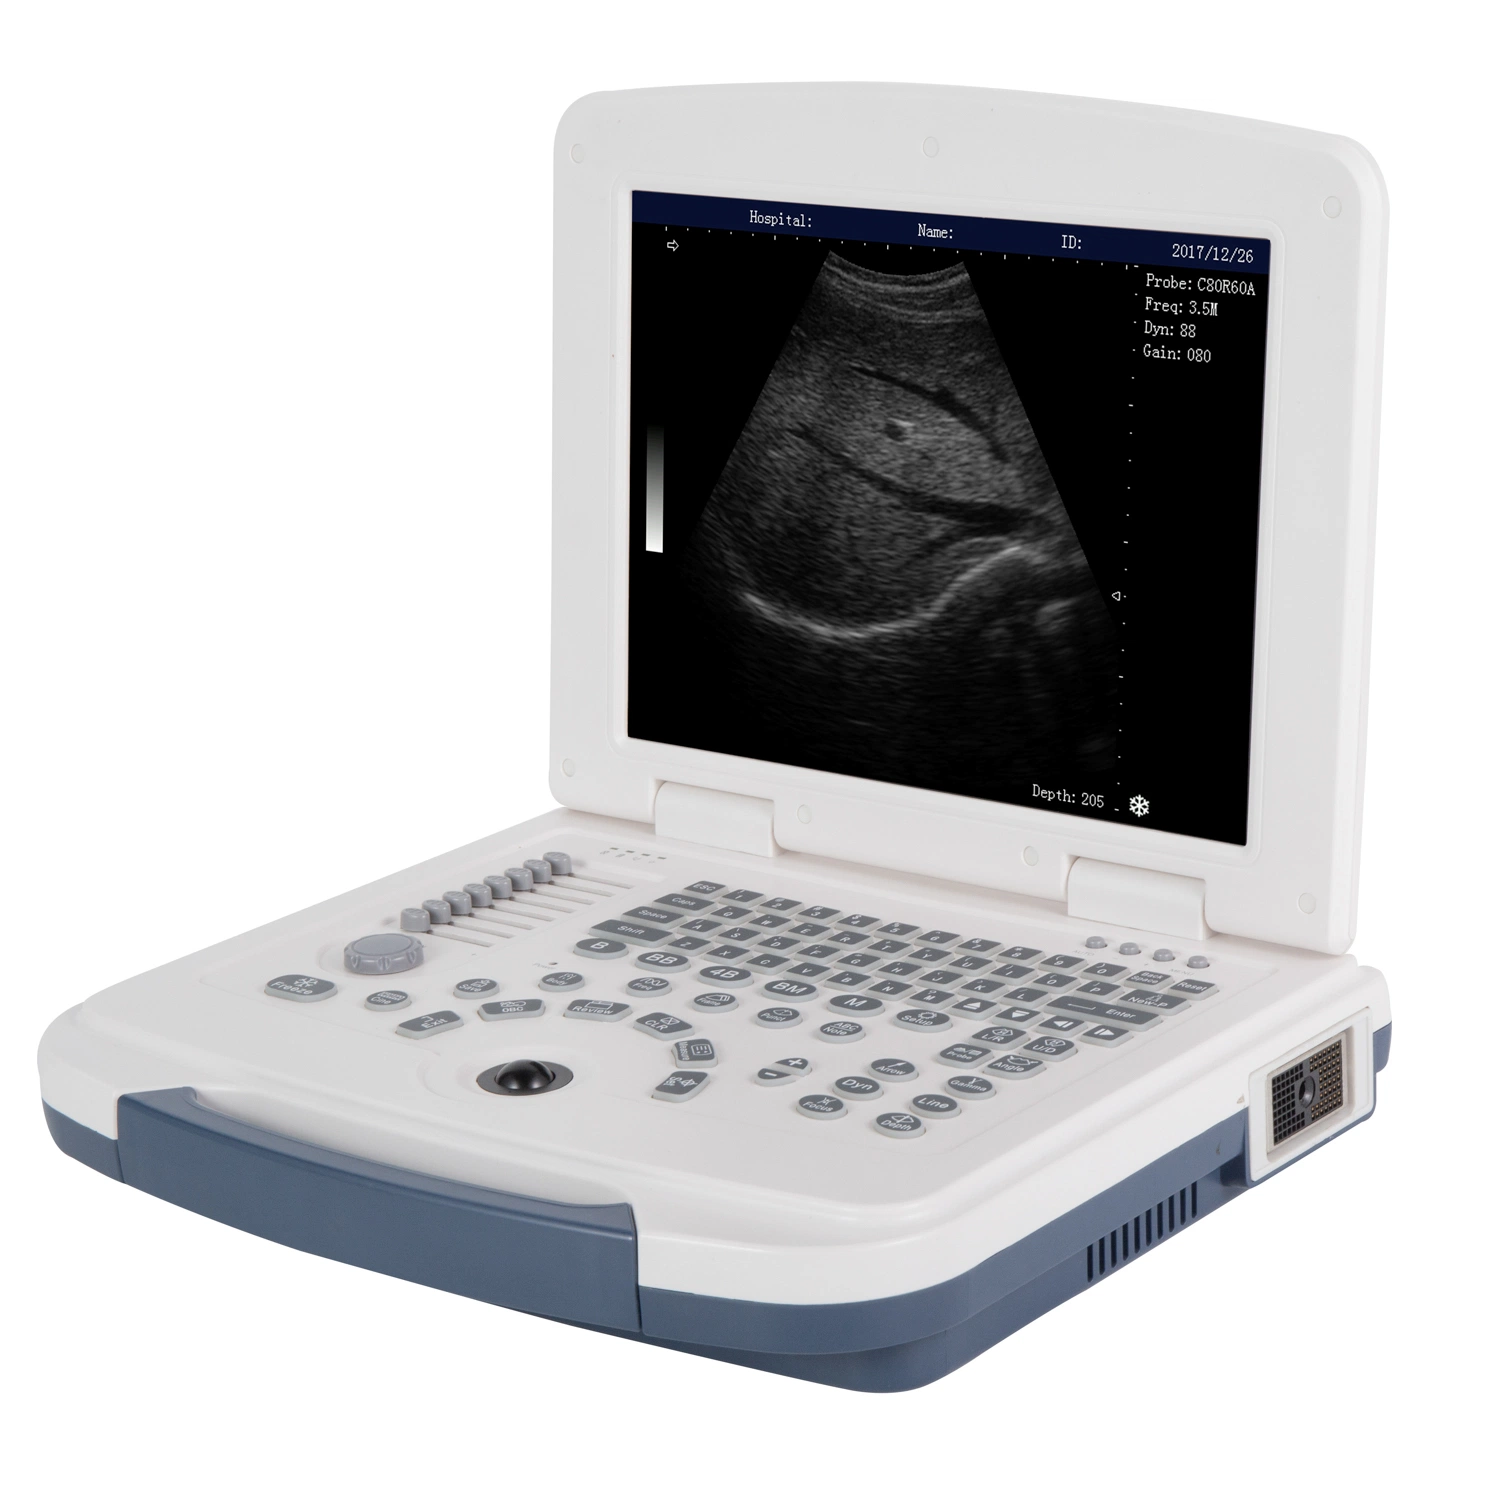 Fy580 Cheap Human Ultrasound Machine Medical Imaging Equipment